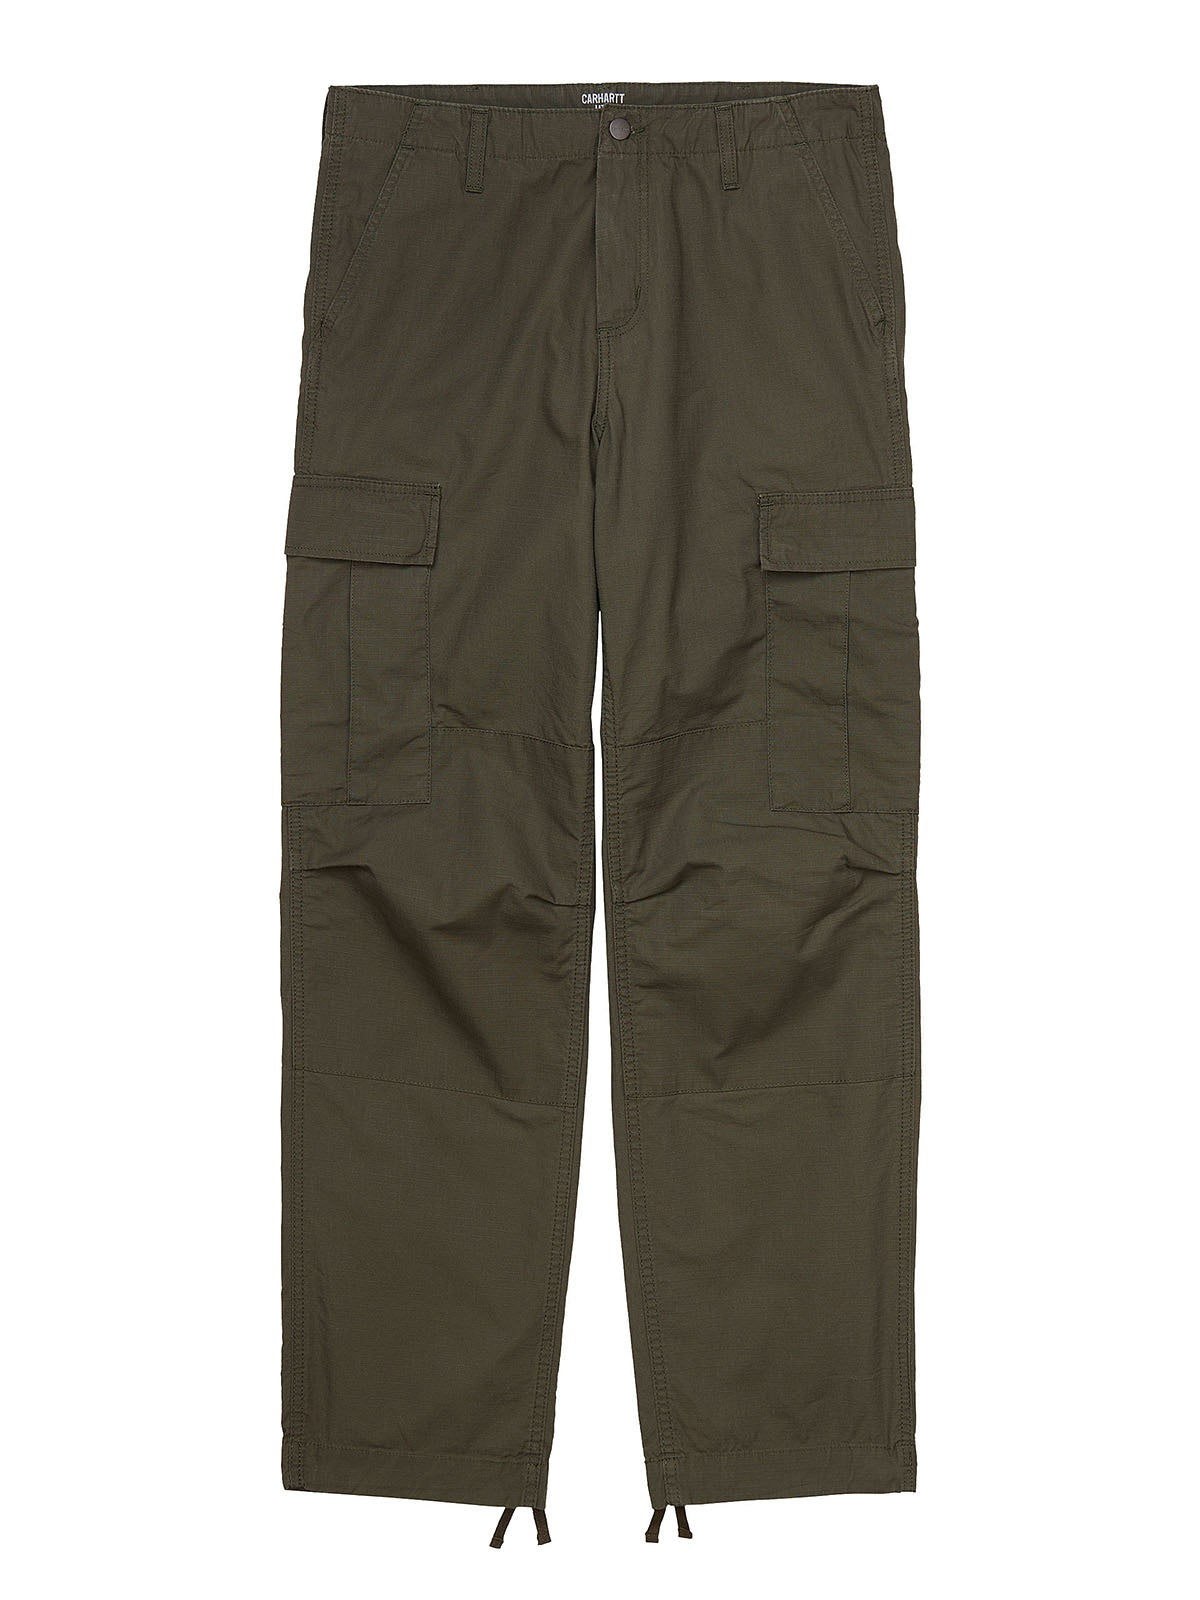 Pantaloni Uomo Carhartt Wip - Regular Cargo Pant - Verde